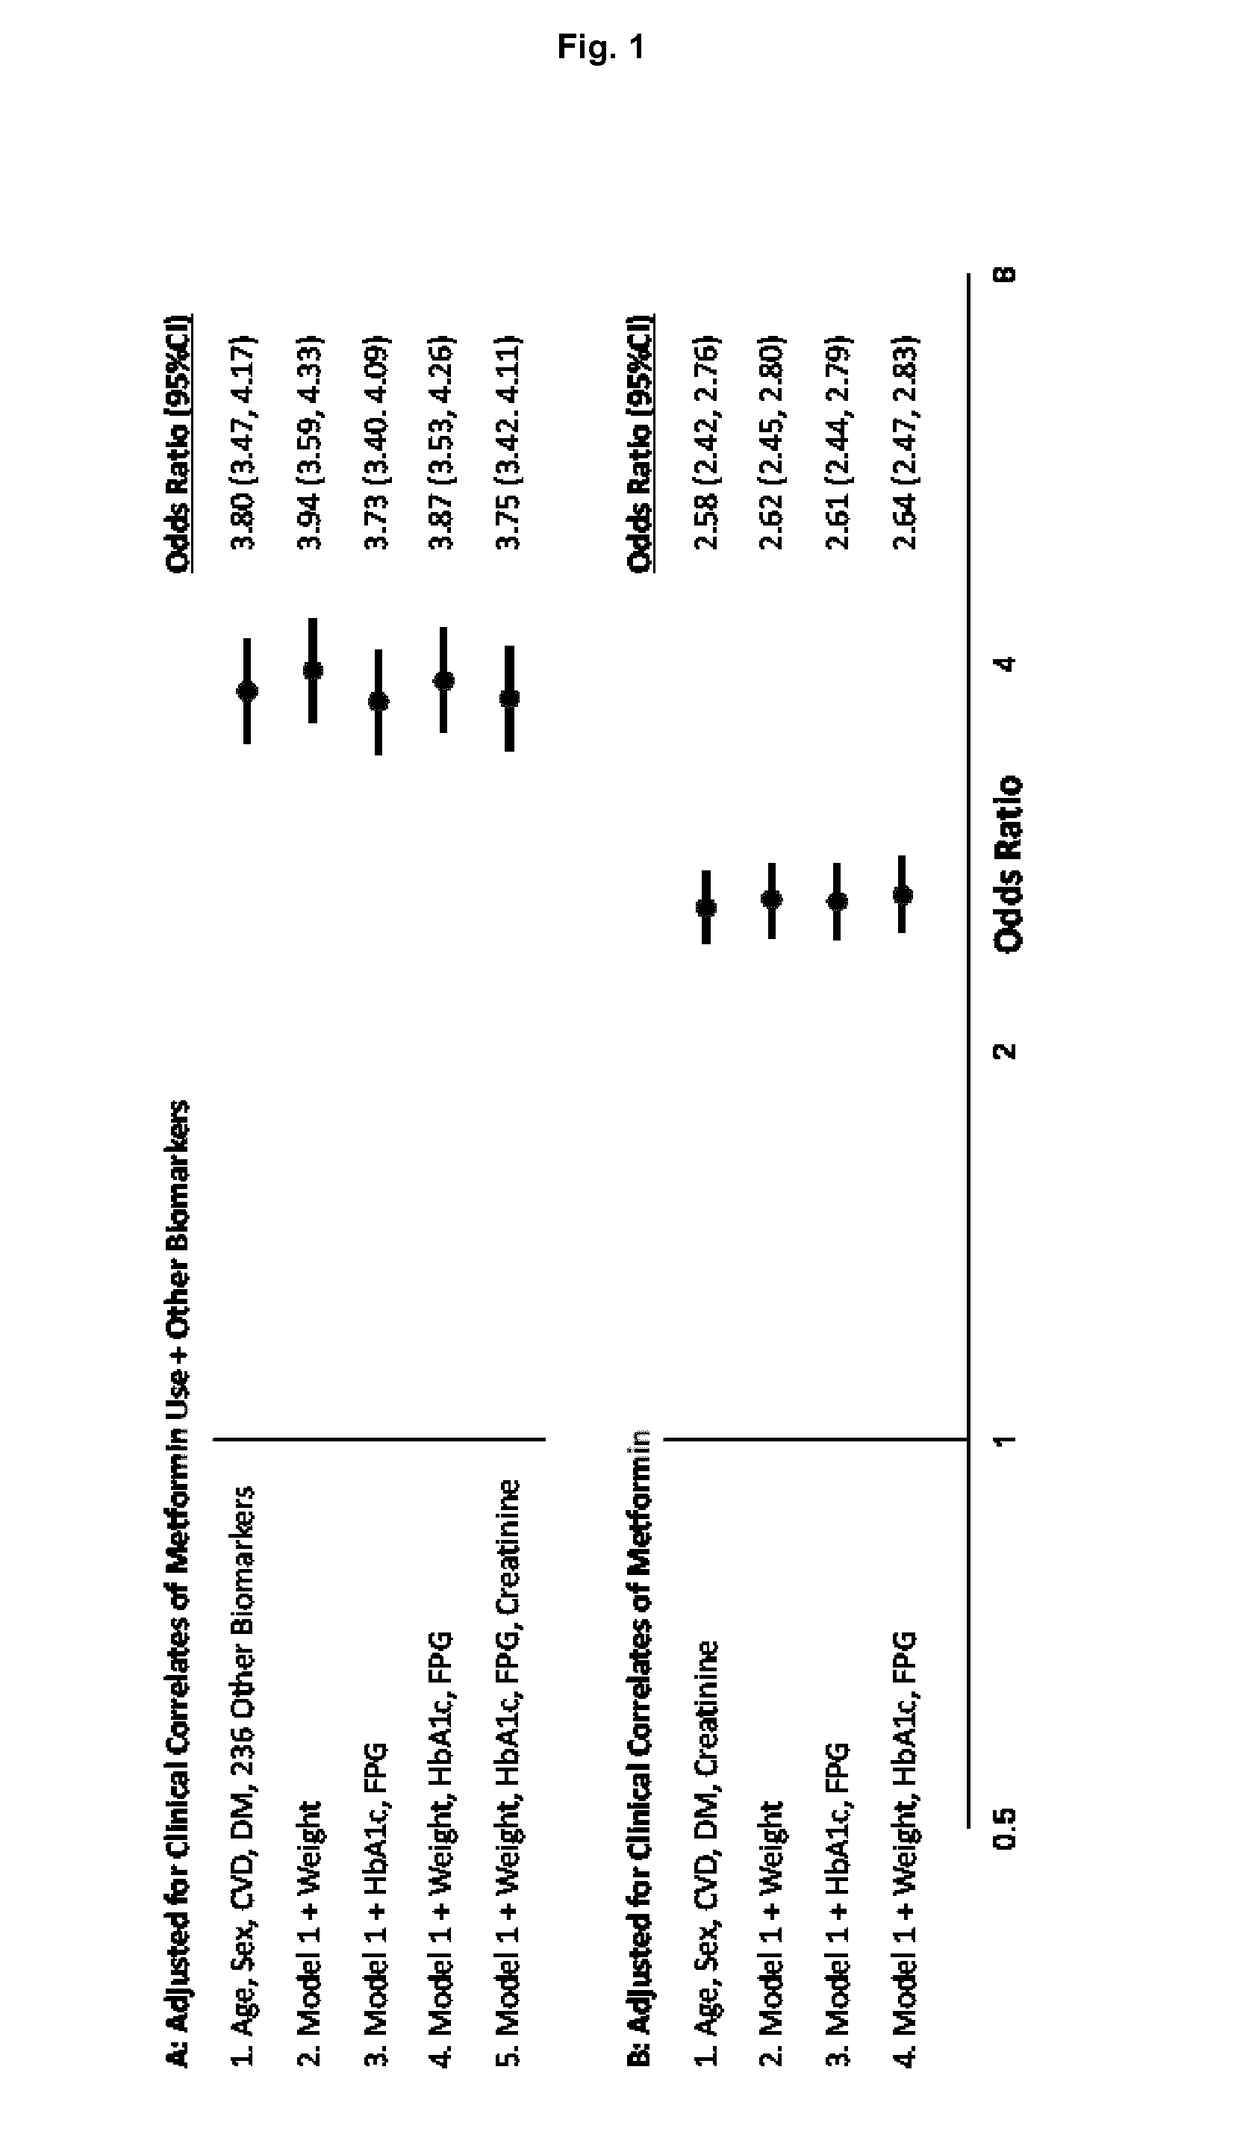 Growth Differentiation Factor 15 as Biomarker for Metformin